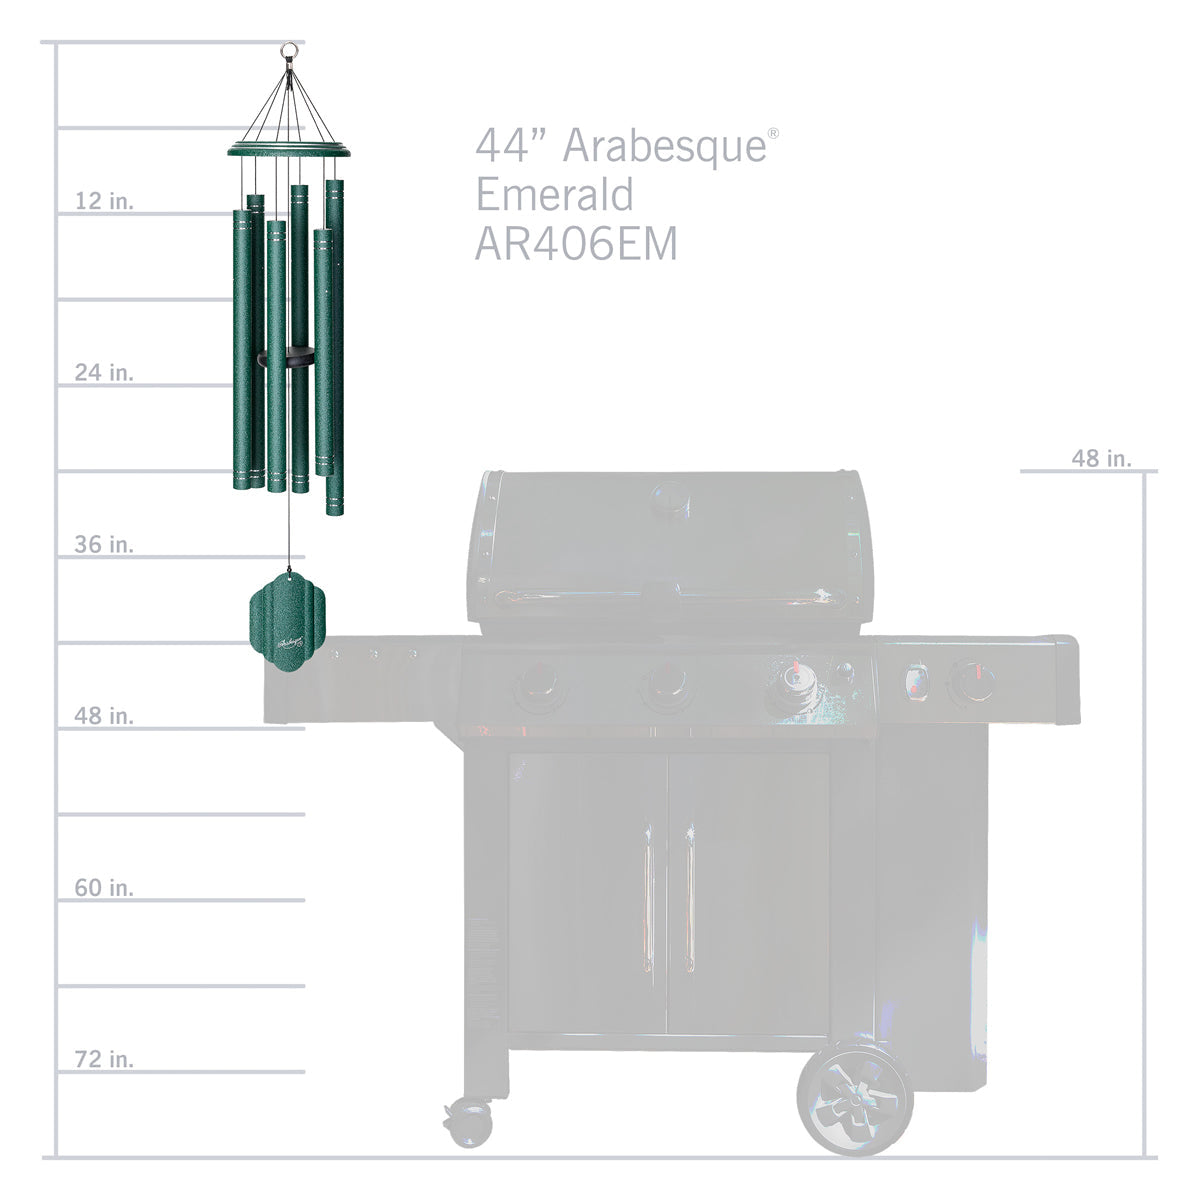 Arabesque 44-inch Wind Chime - Emerald